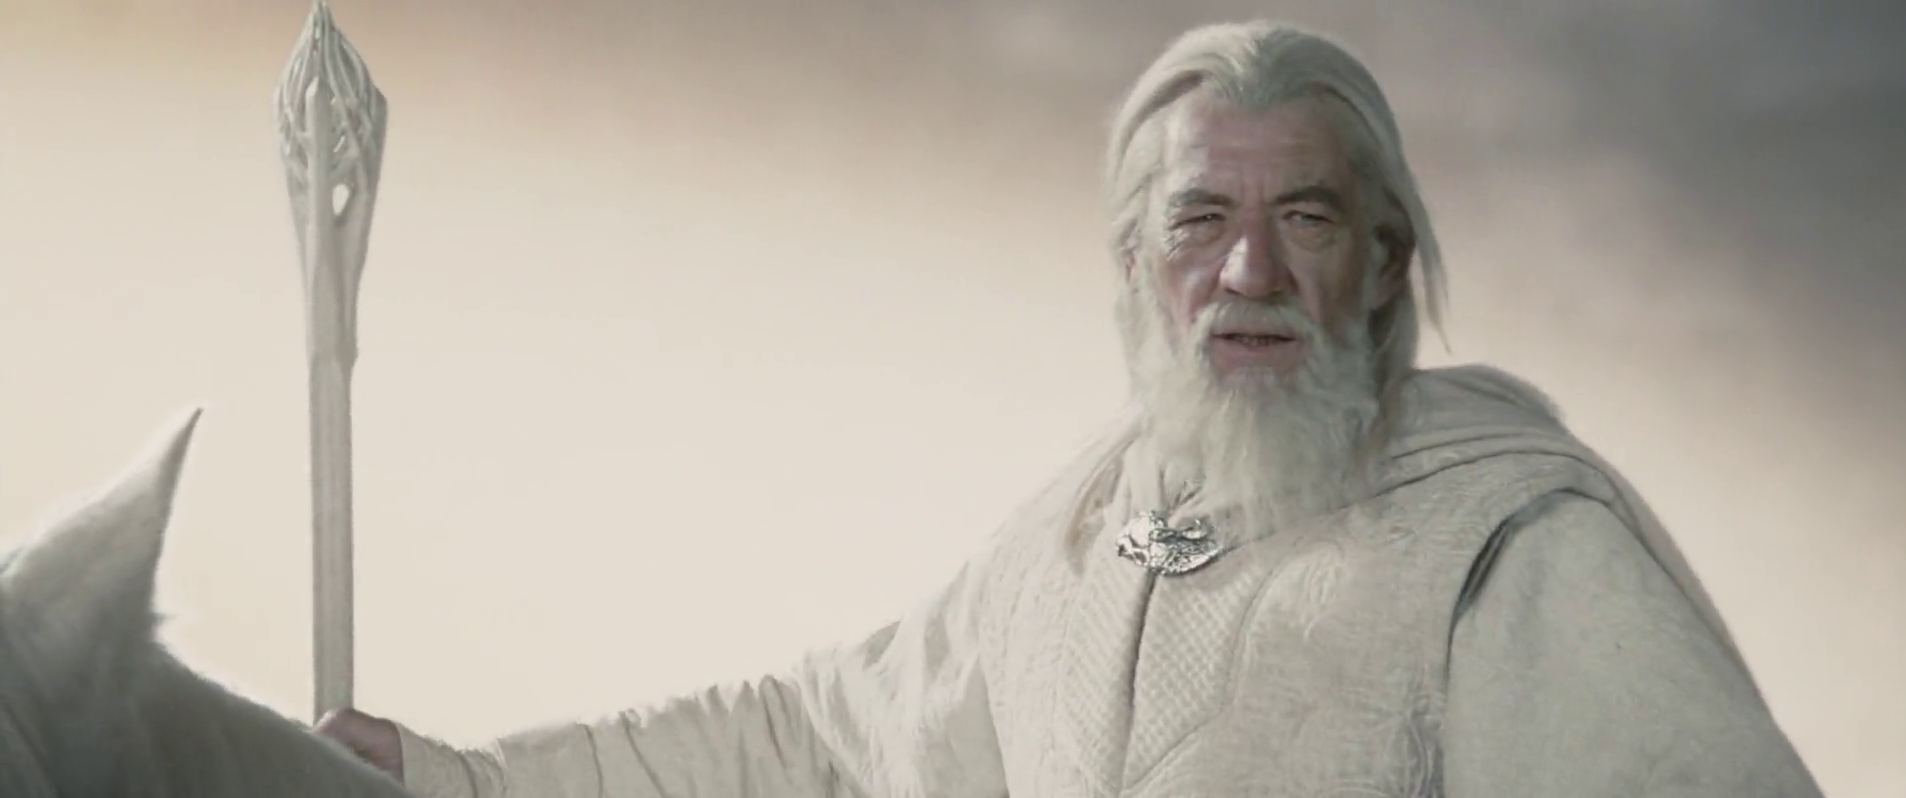 Gandalf the White